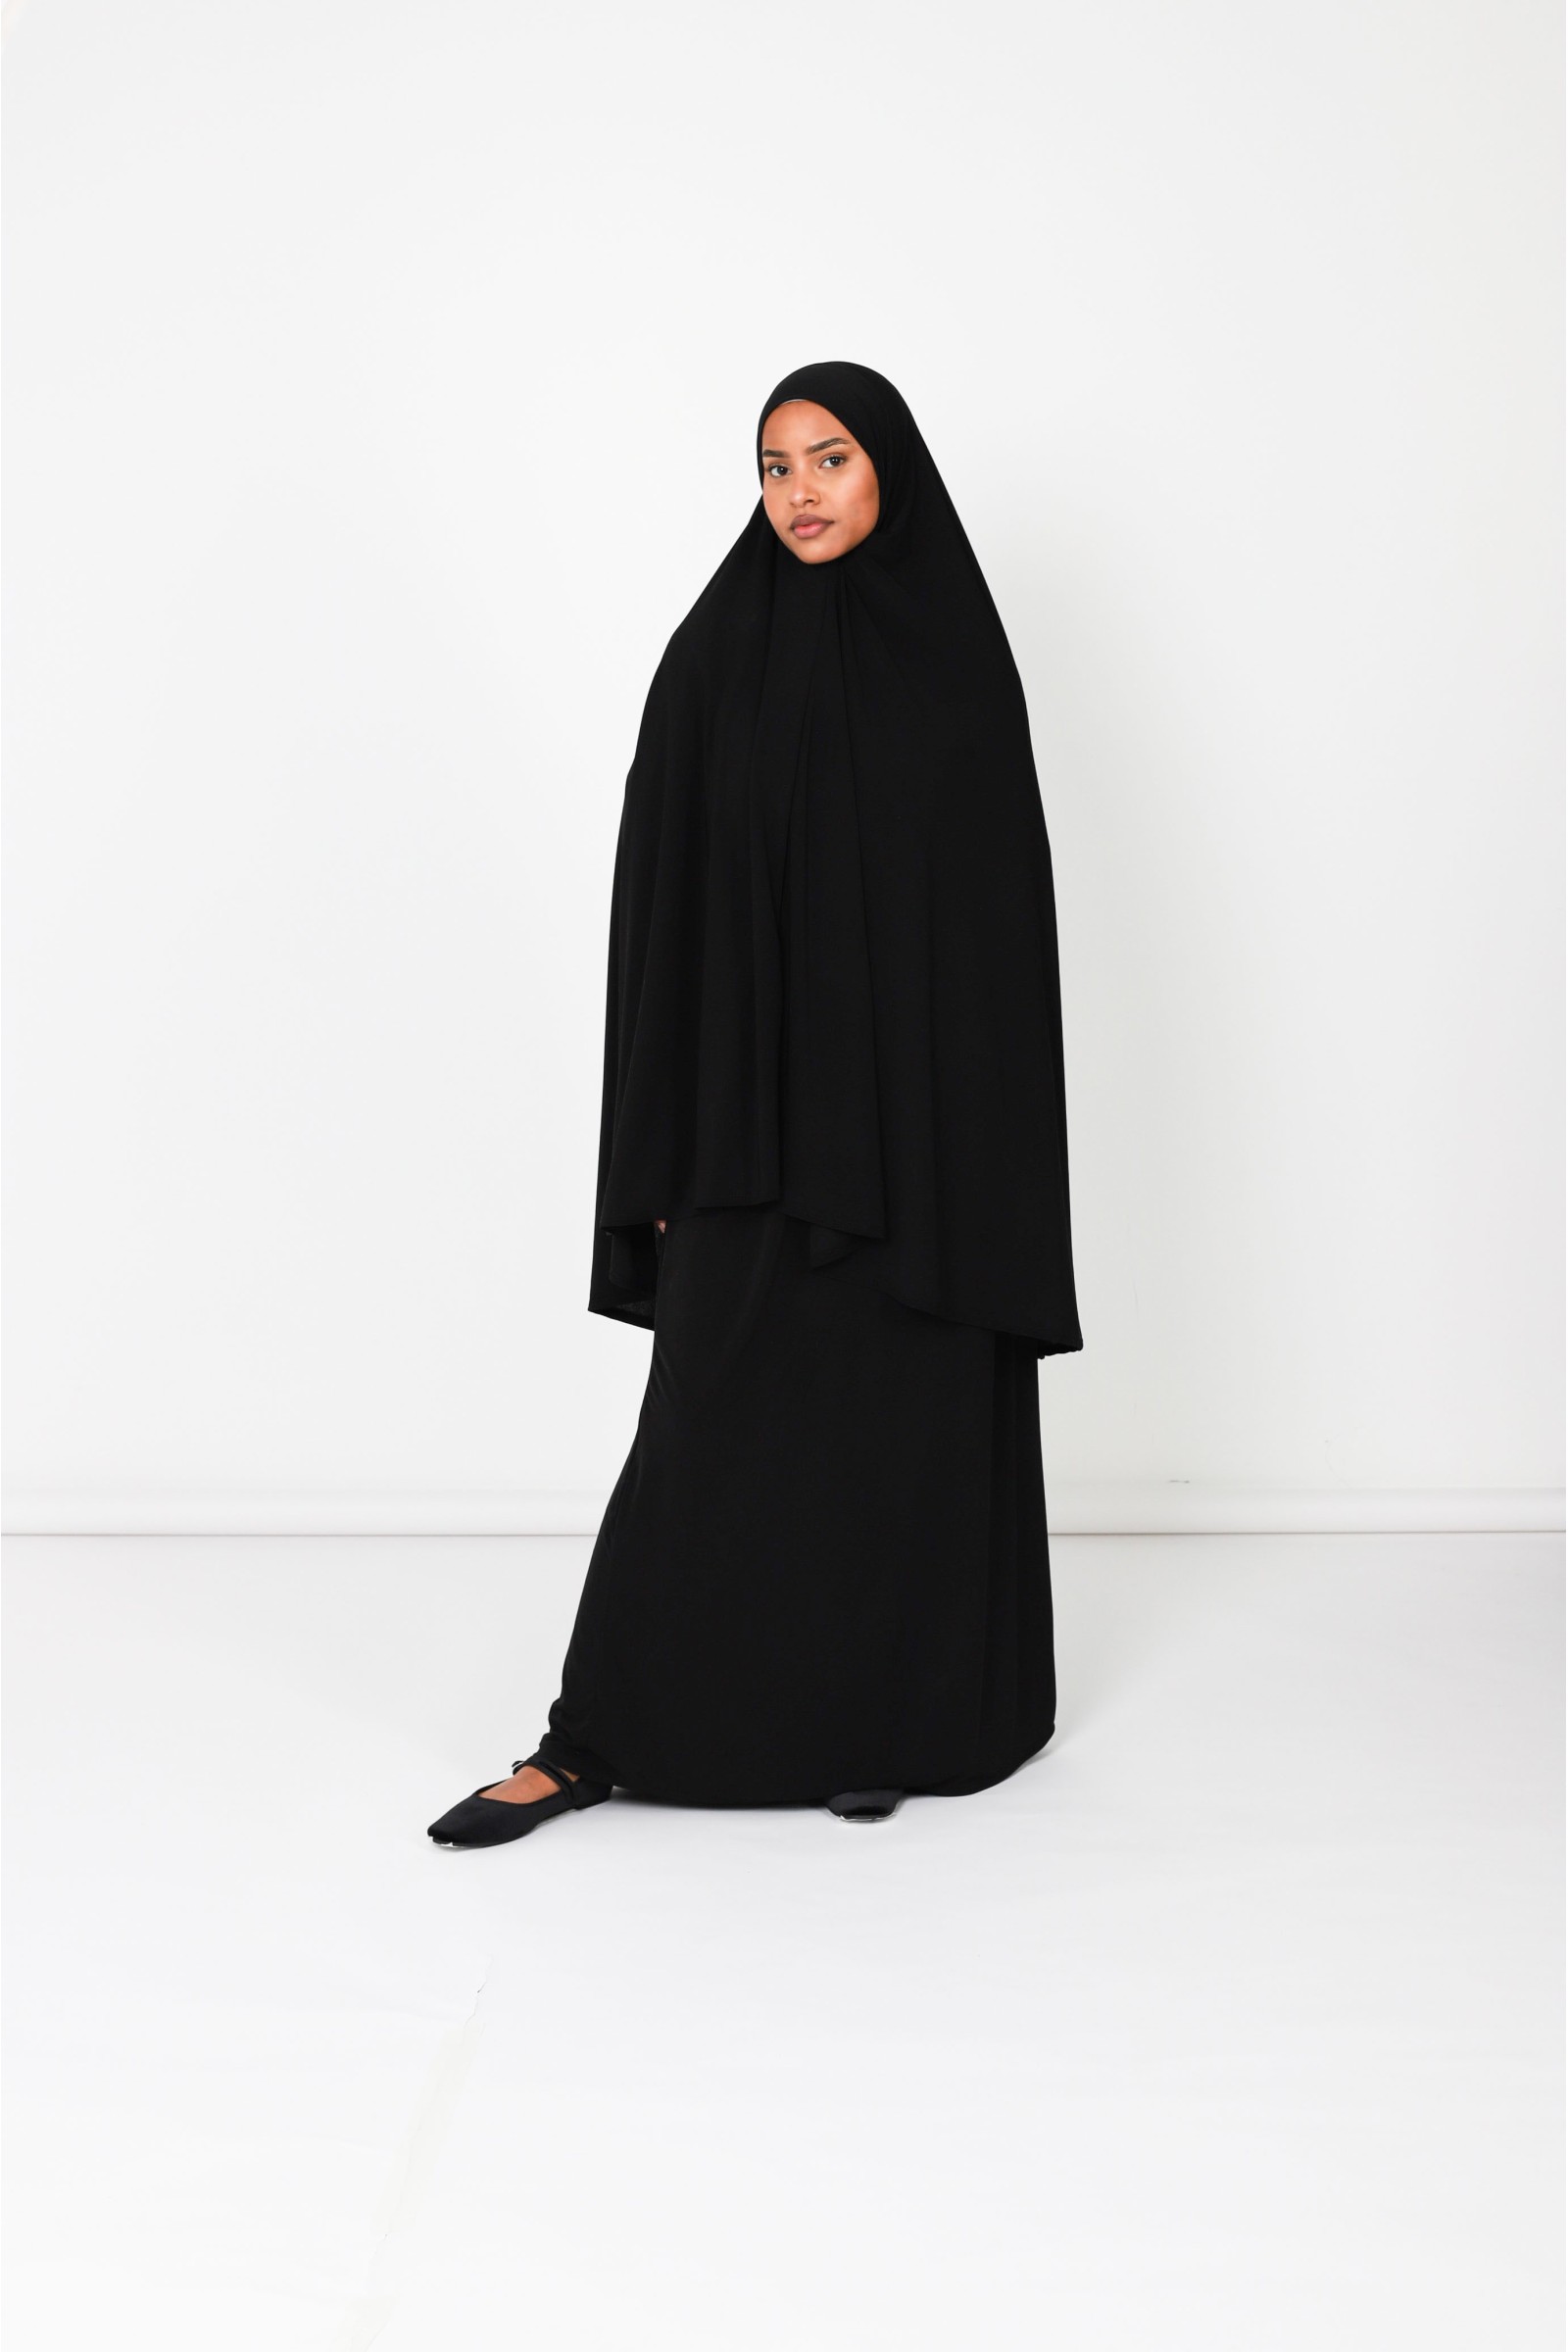 Long mastour prayer outfit for modest Muslim women